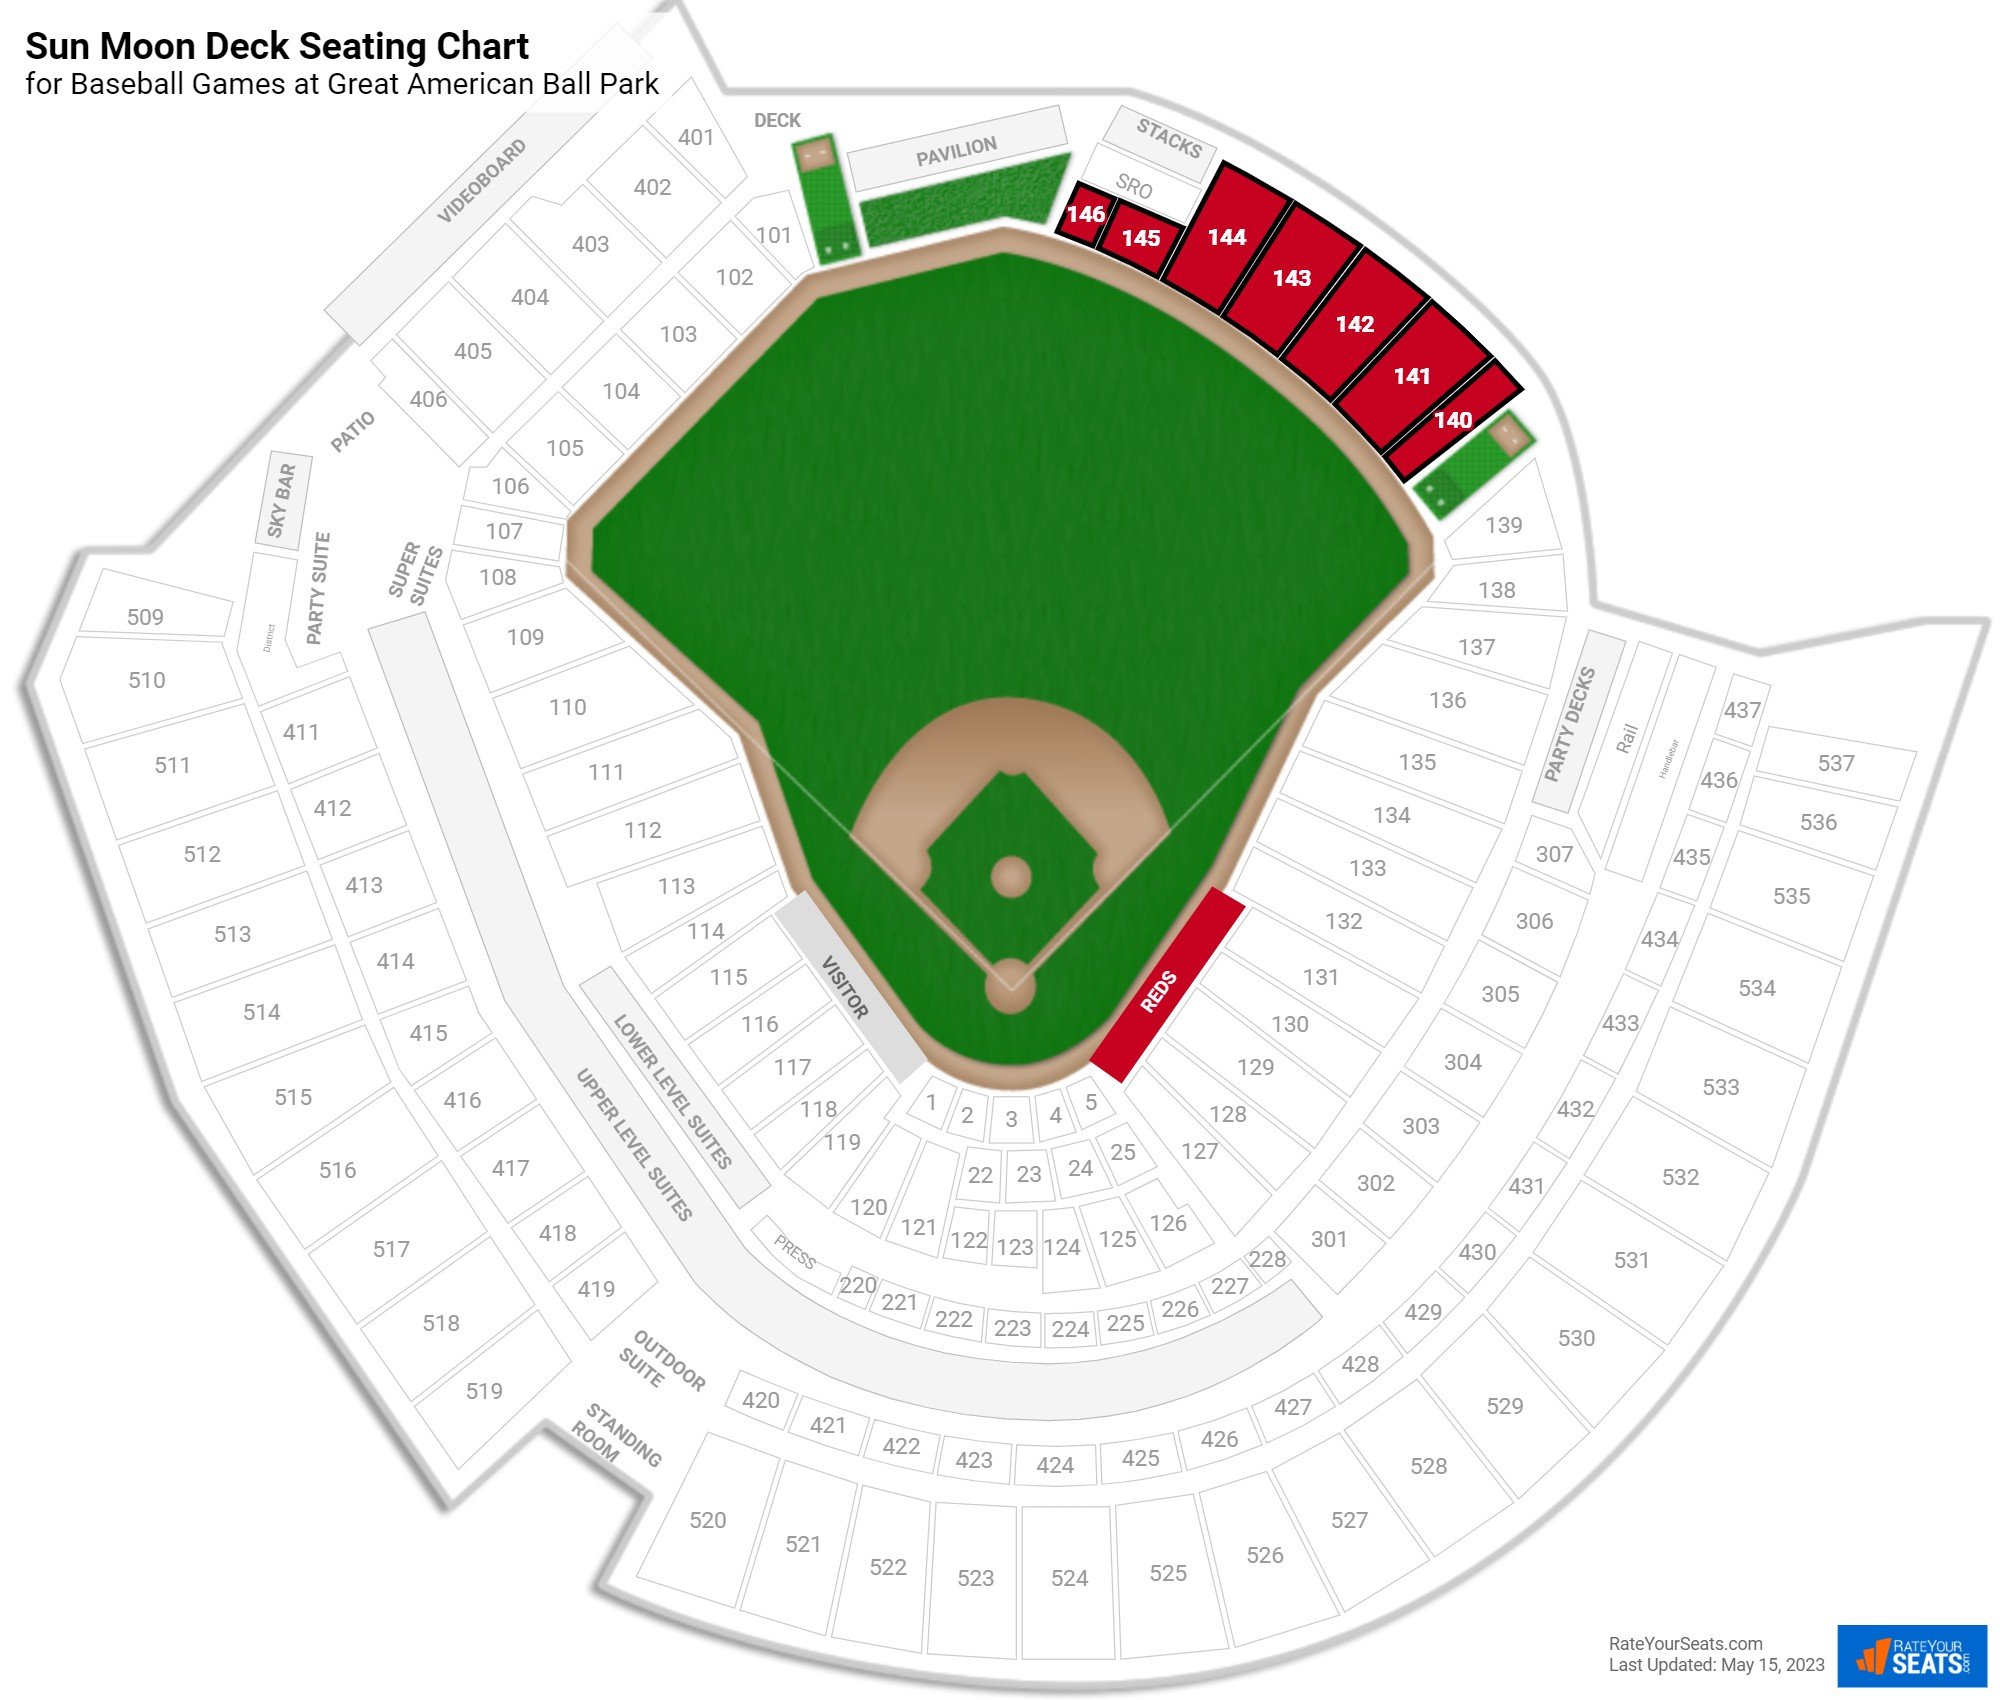 Baseball Sun Moon Deck Seating Chart at Great American Ball Park